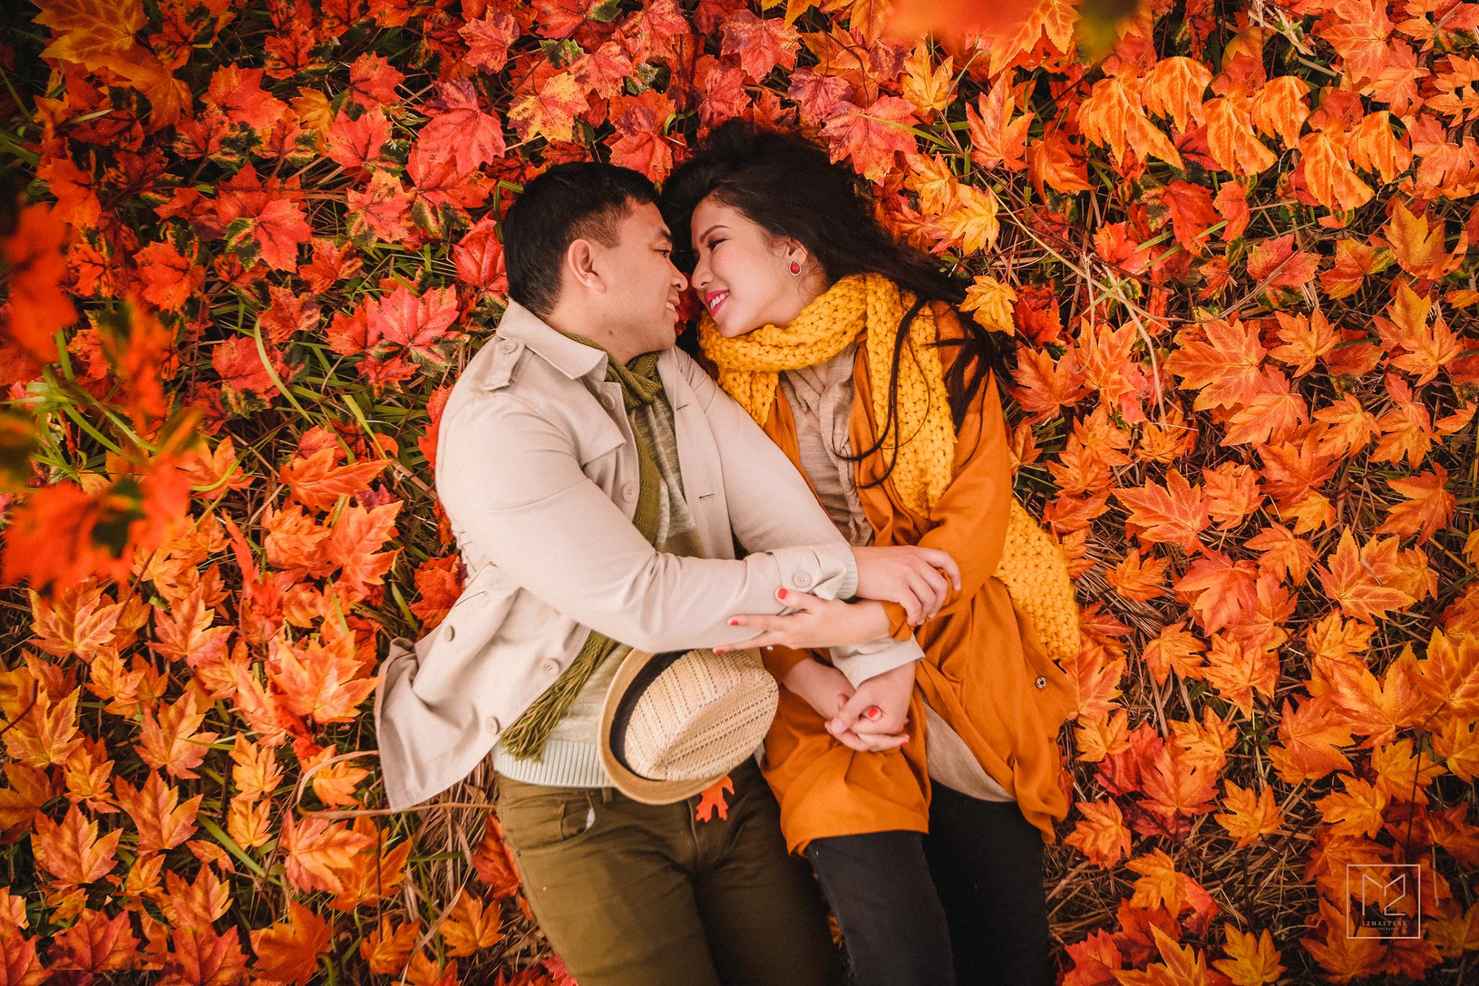 Outdoor autumn wedding photo session ideas